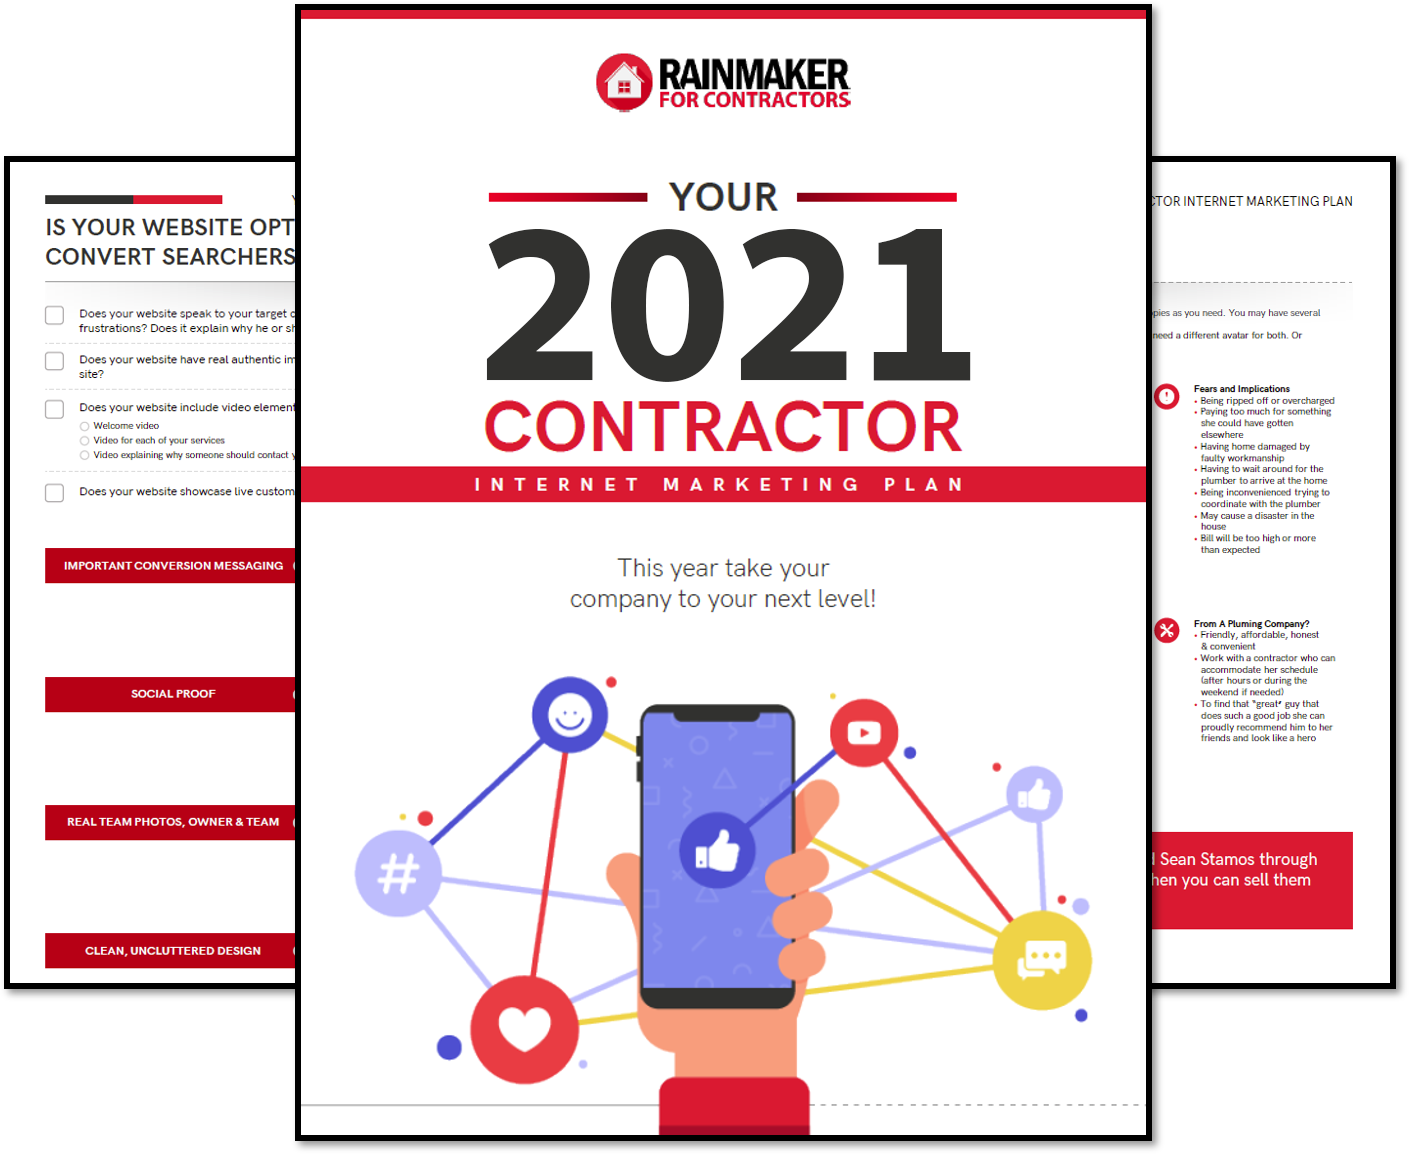 rainmaker-for-contractors-marketing-plan-image 2021